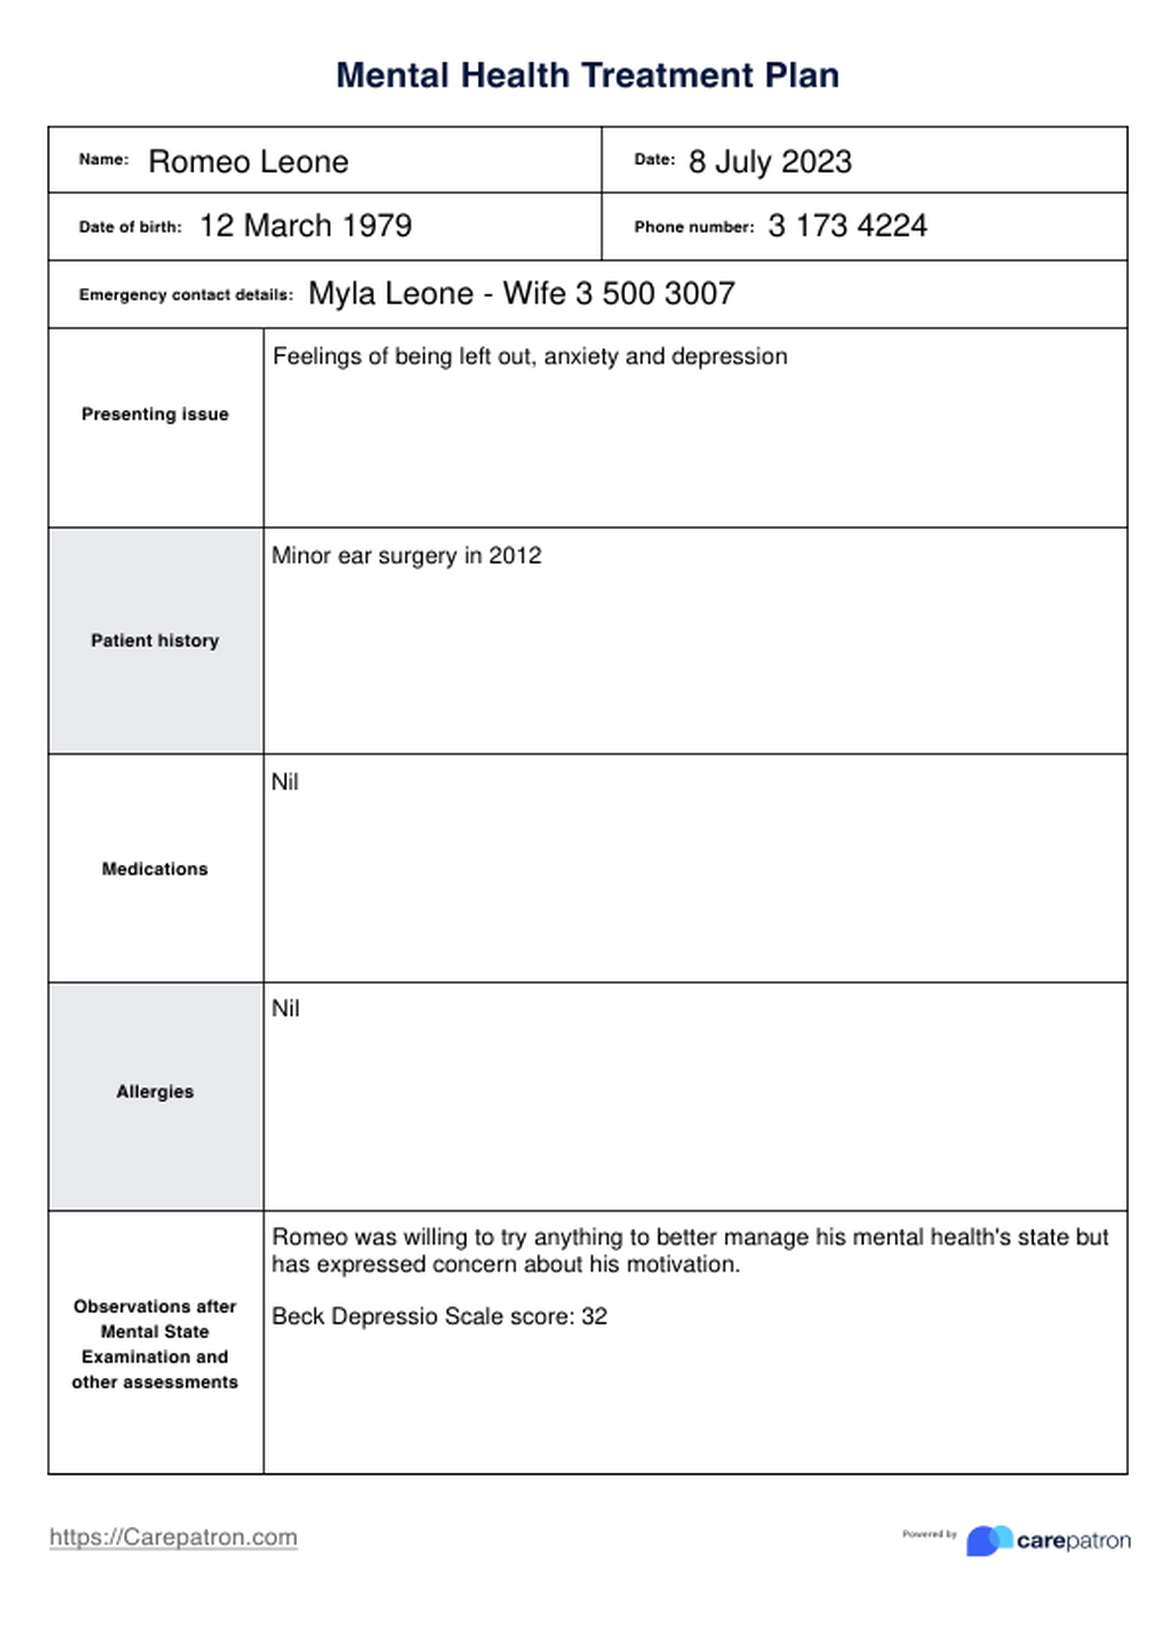 Mental Health Treatment Plans PDF Example